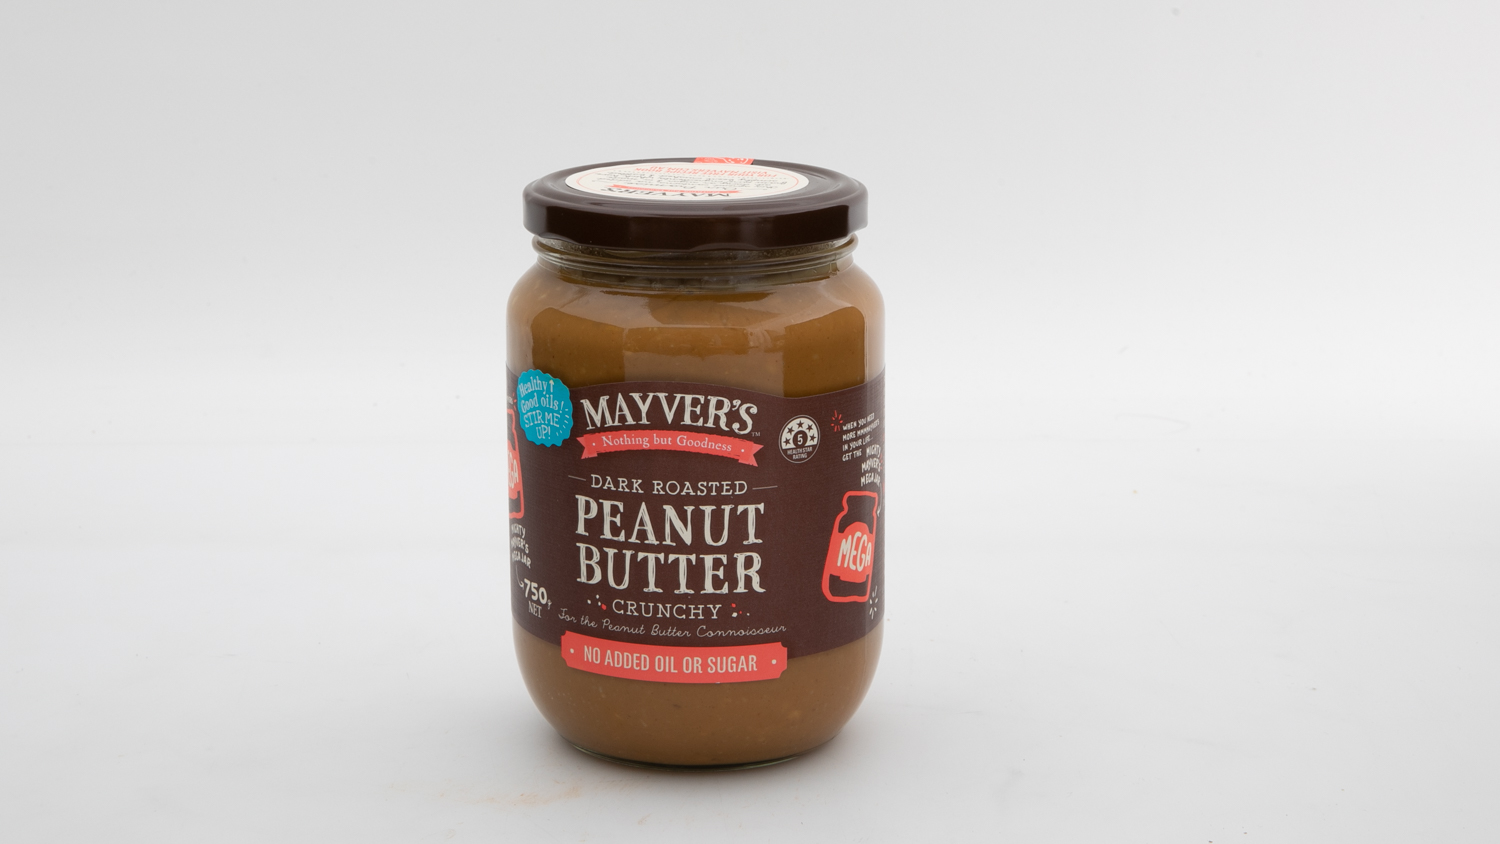 Mayver's Dark Roasted Peanut Butter Crunchy carousel image